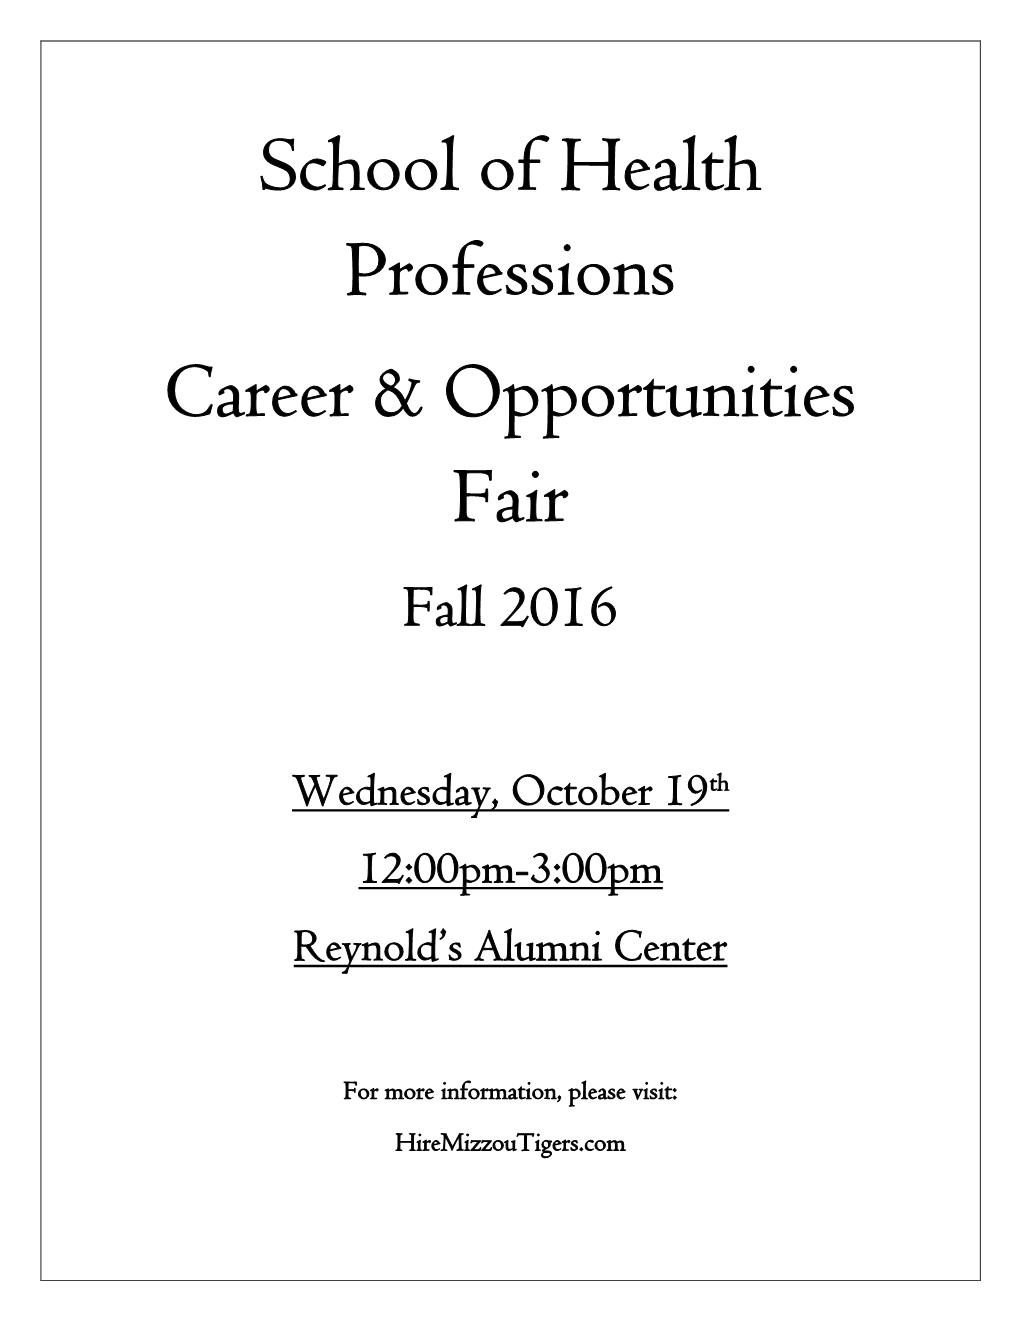 School of Health Professions Career & Opportunities Fair